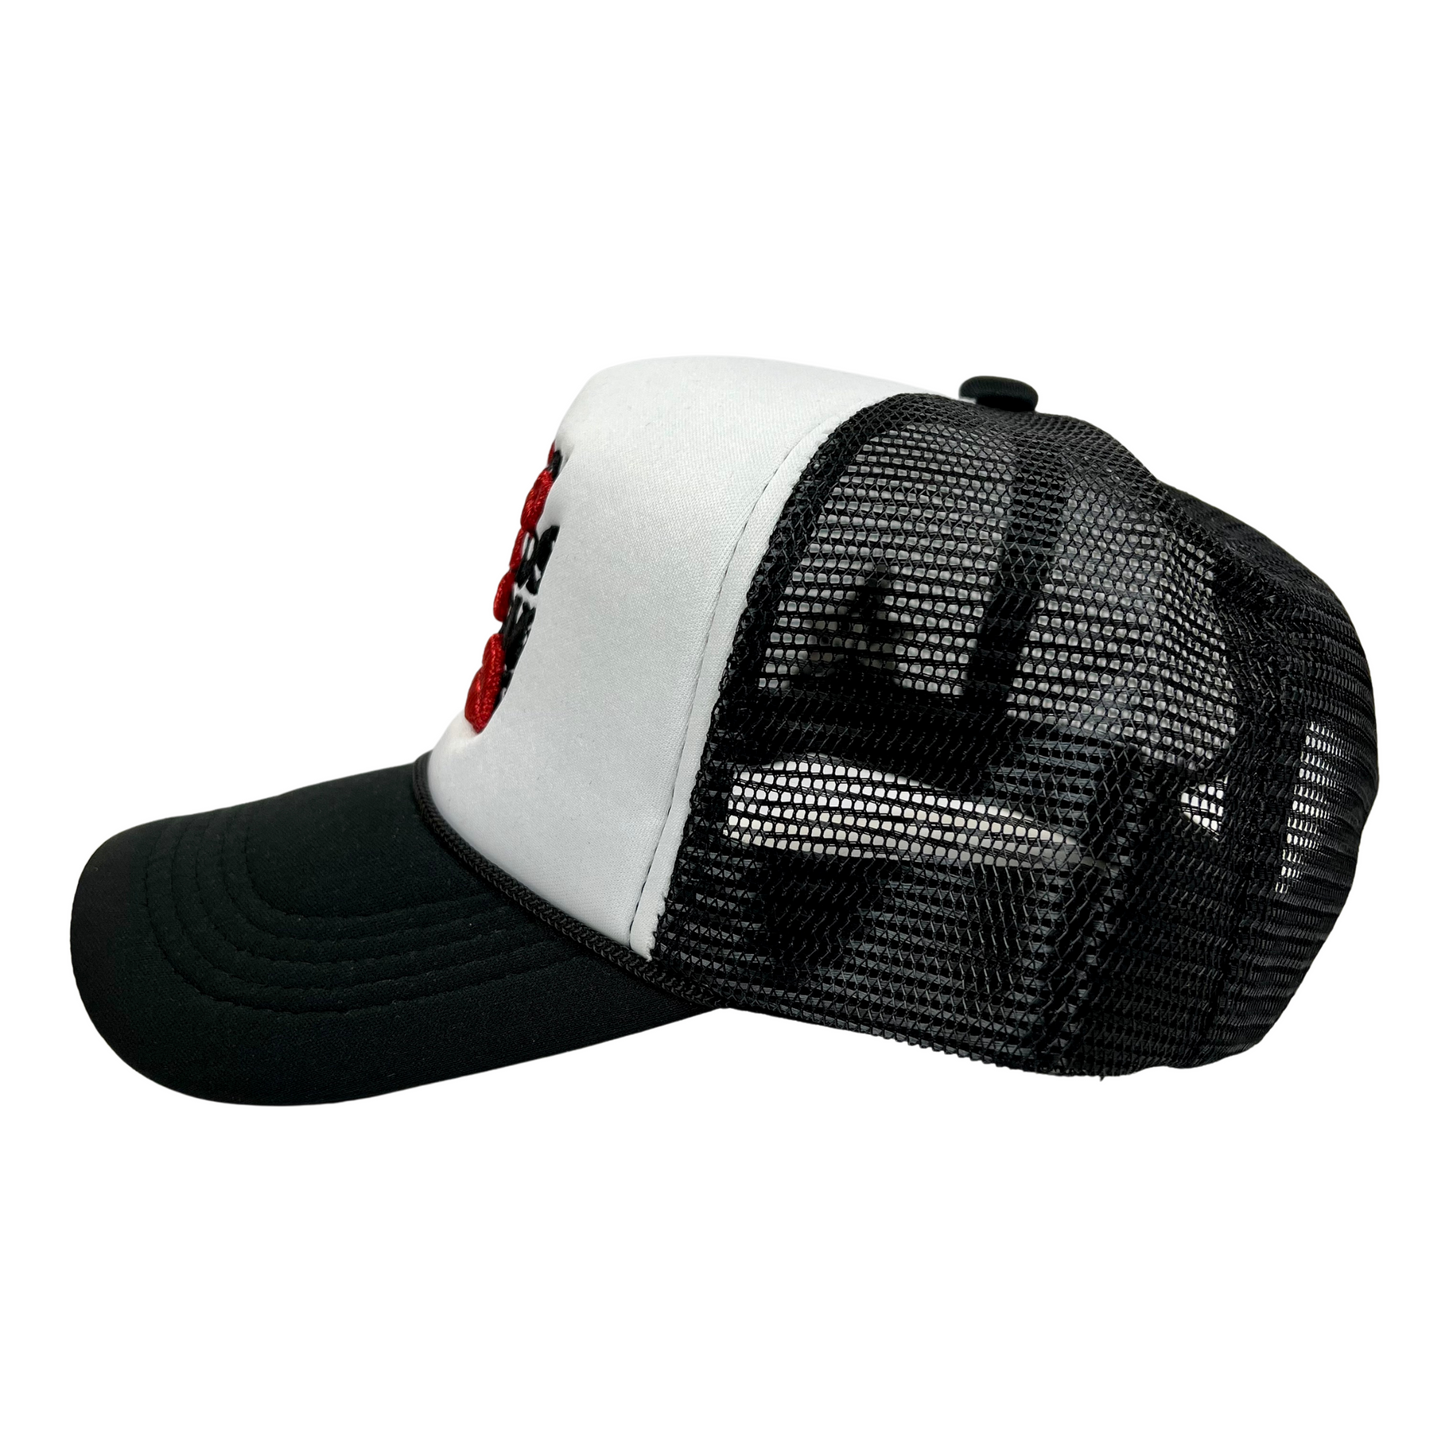 La Ropa PBSB Trucker Hat (Black/White)